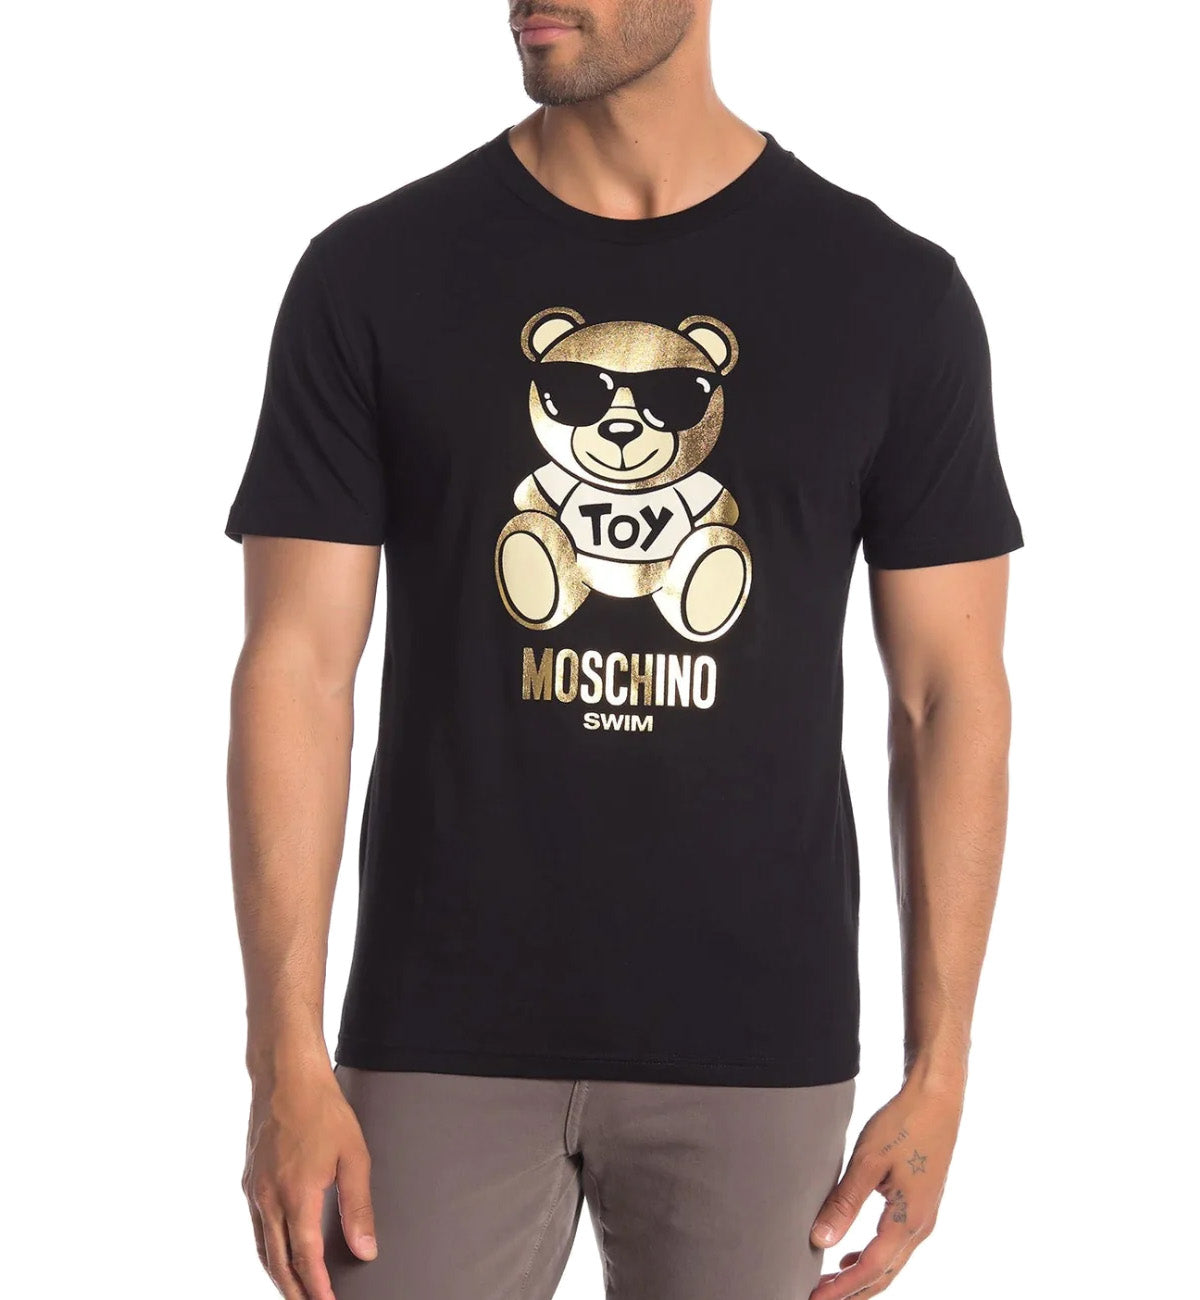 Moschino Swim Bear Gold Foil Toy T-Shirt (Black)